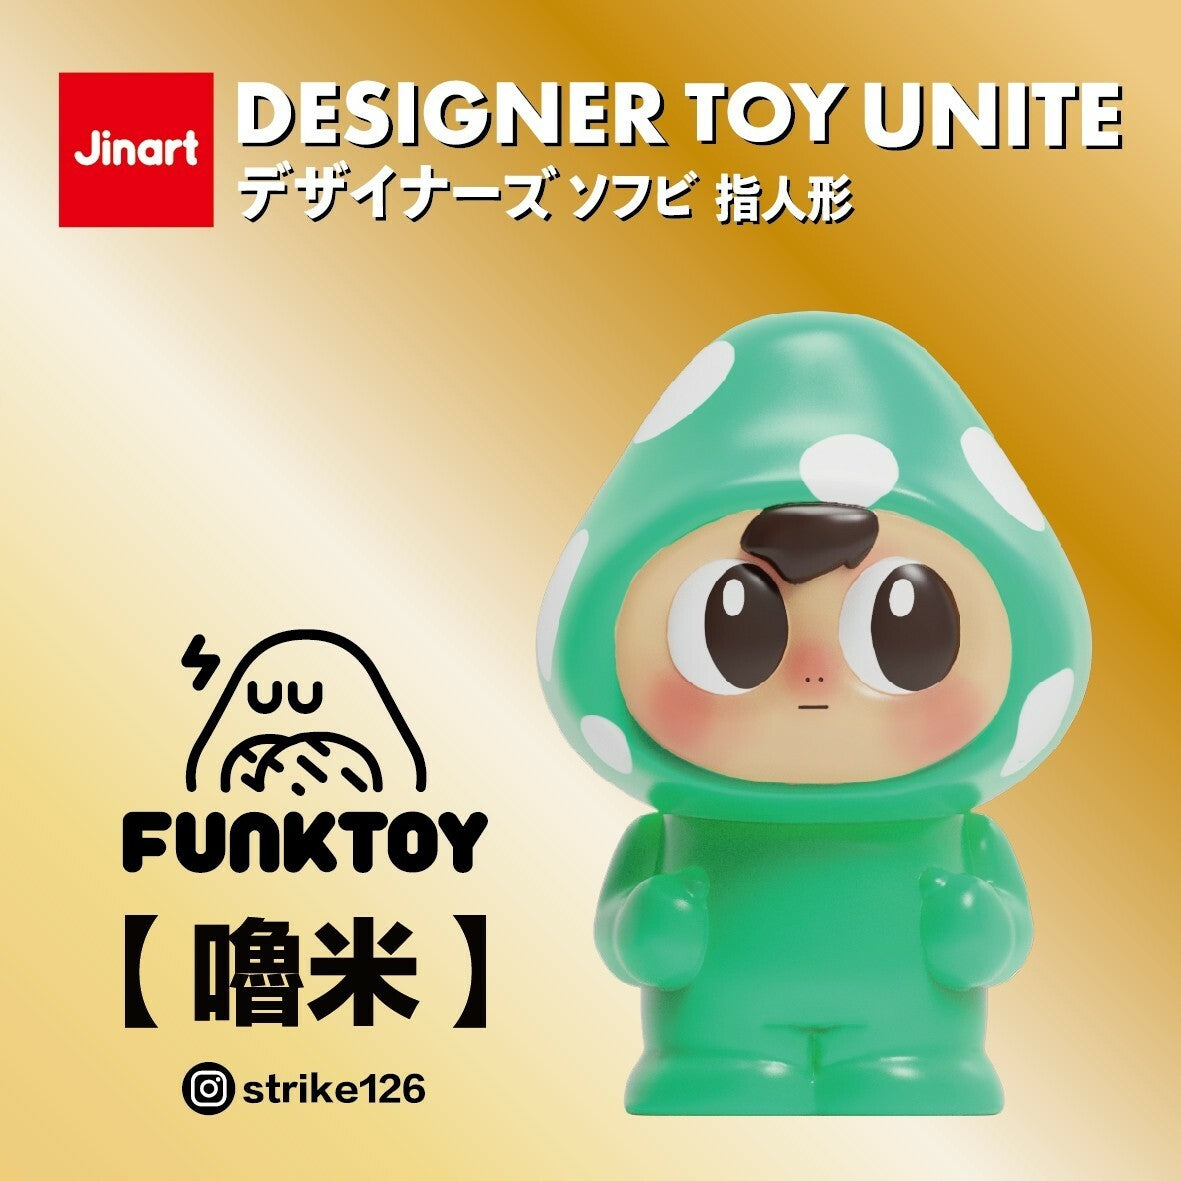 Designer Toy Unite Gatcha Series